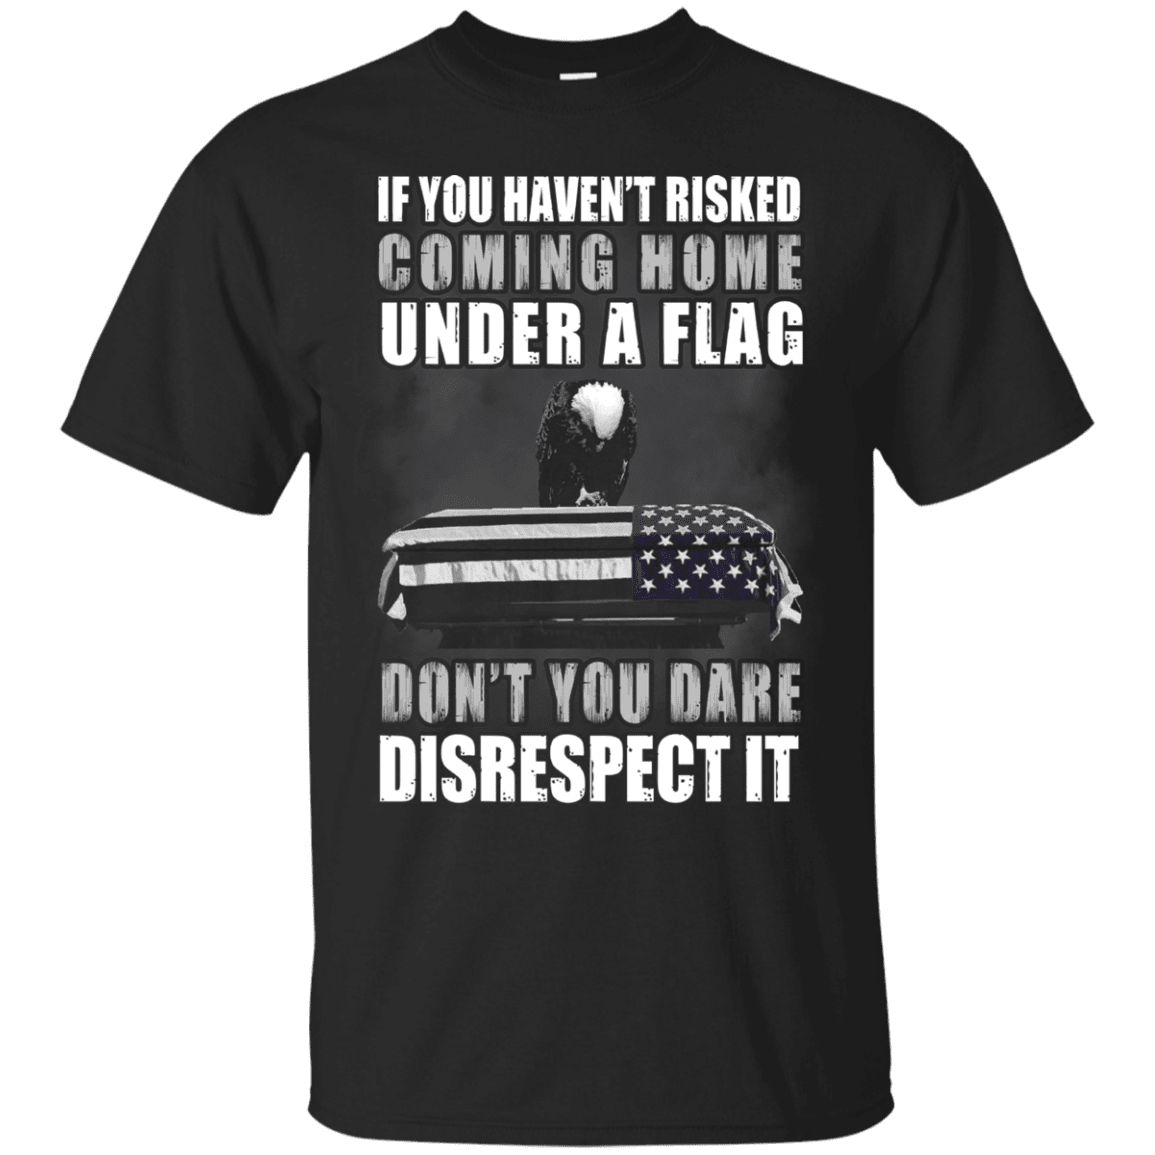 Military T-Shirt "Under A Flag Disrespect It Men" Front-TShirt-General-Veterans Nation